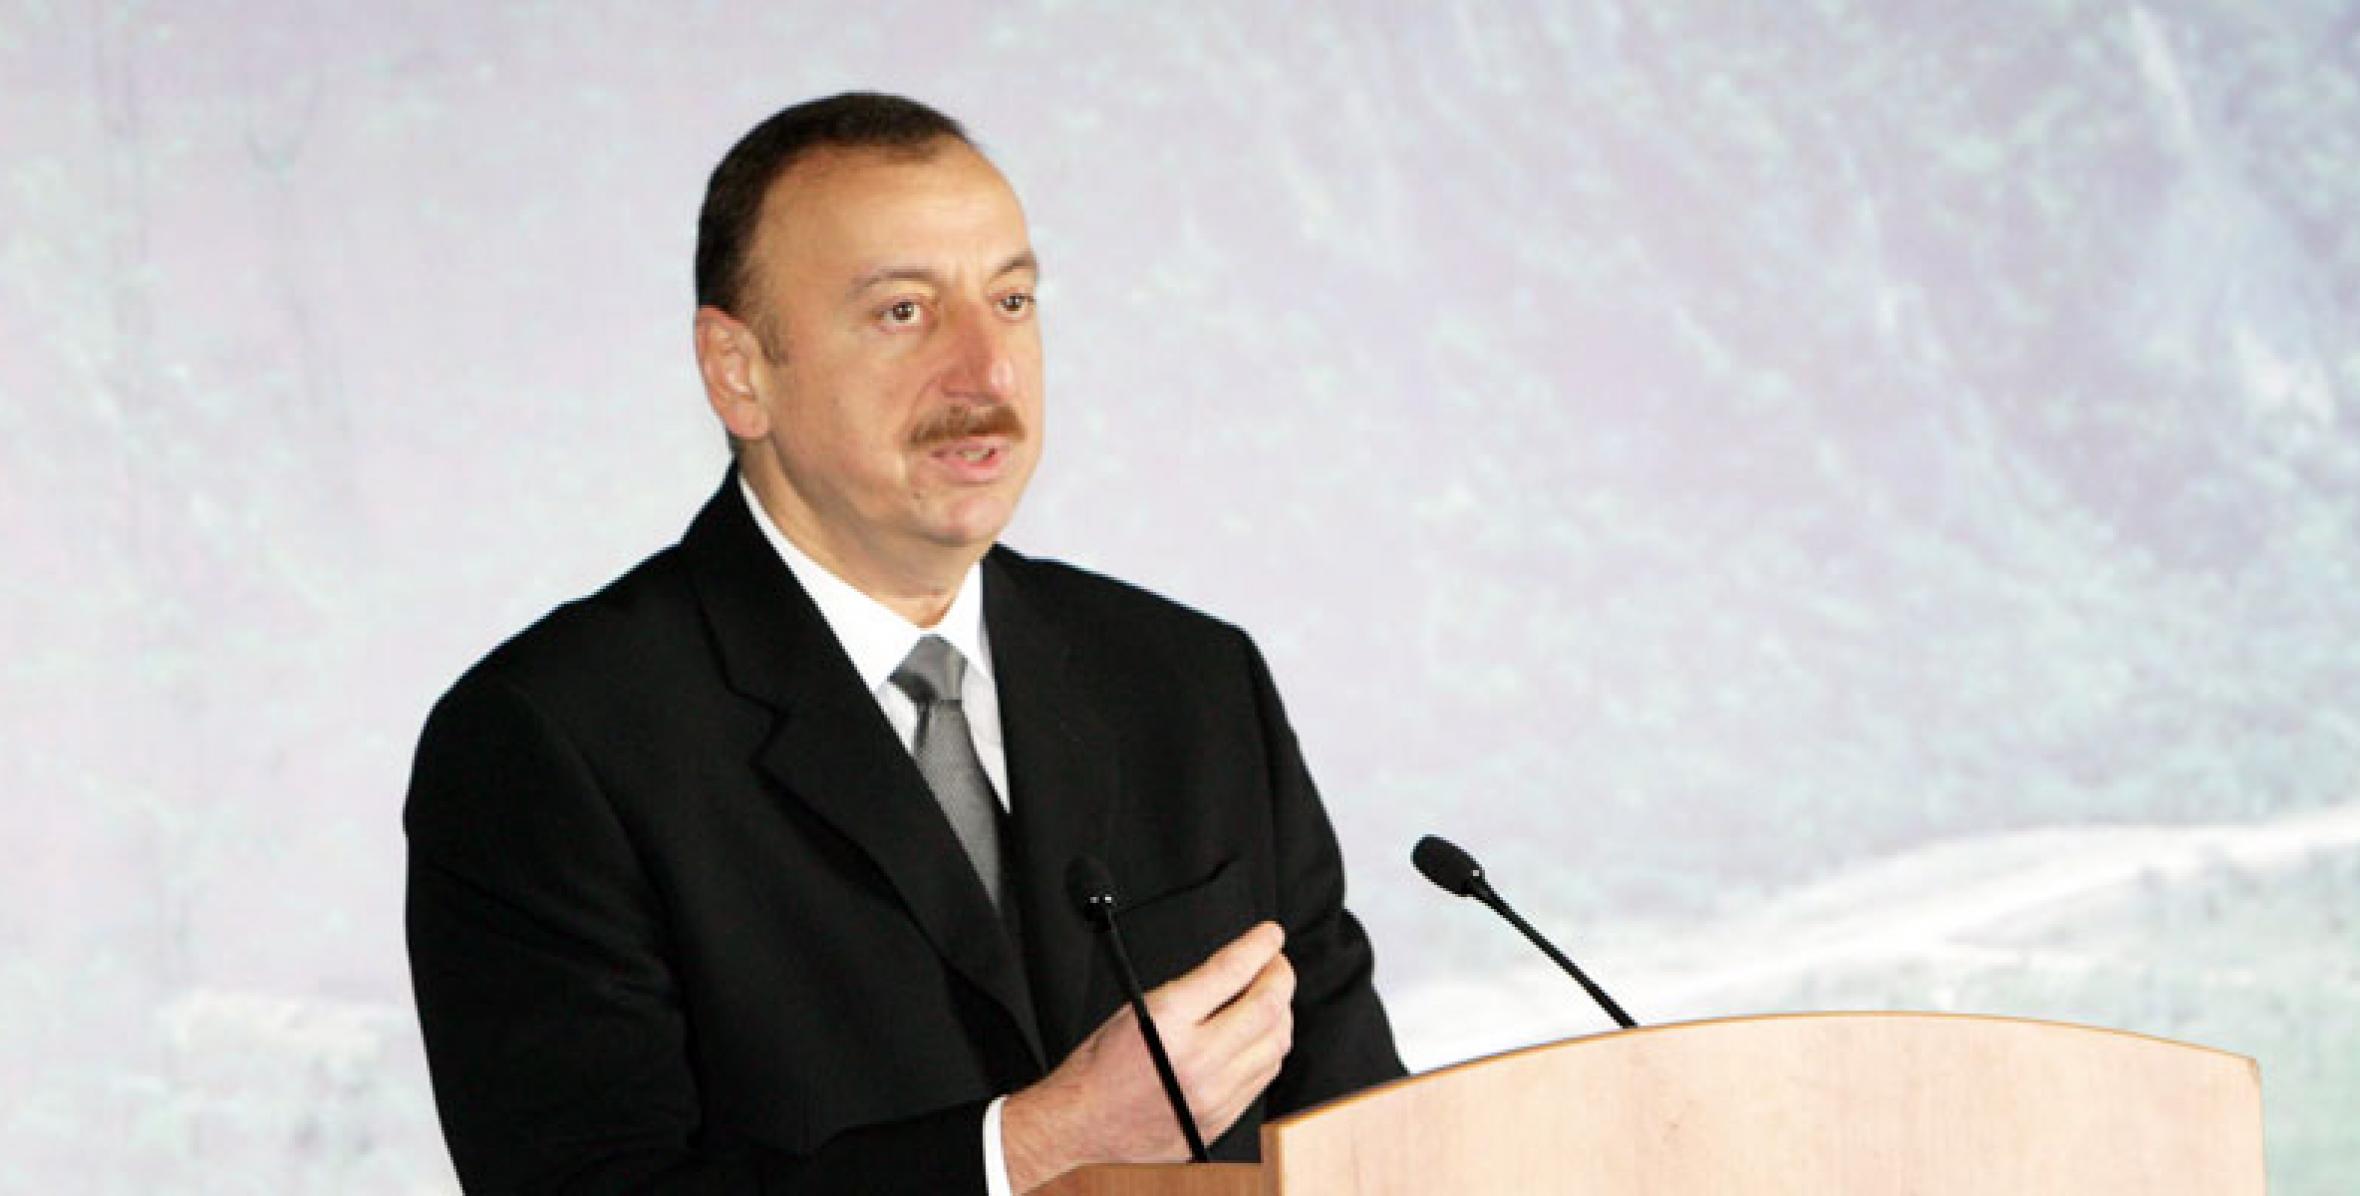 Speech by Ilham Aliyev at the opening of the Oguz-Qabala-Baku water pipeline